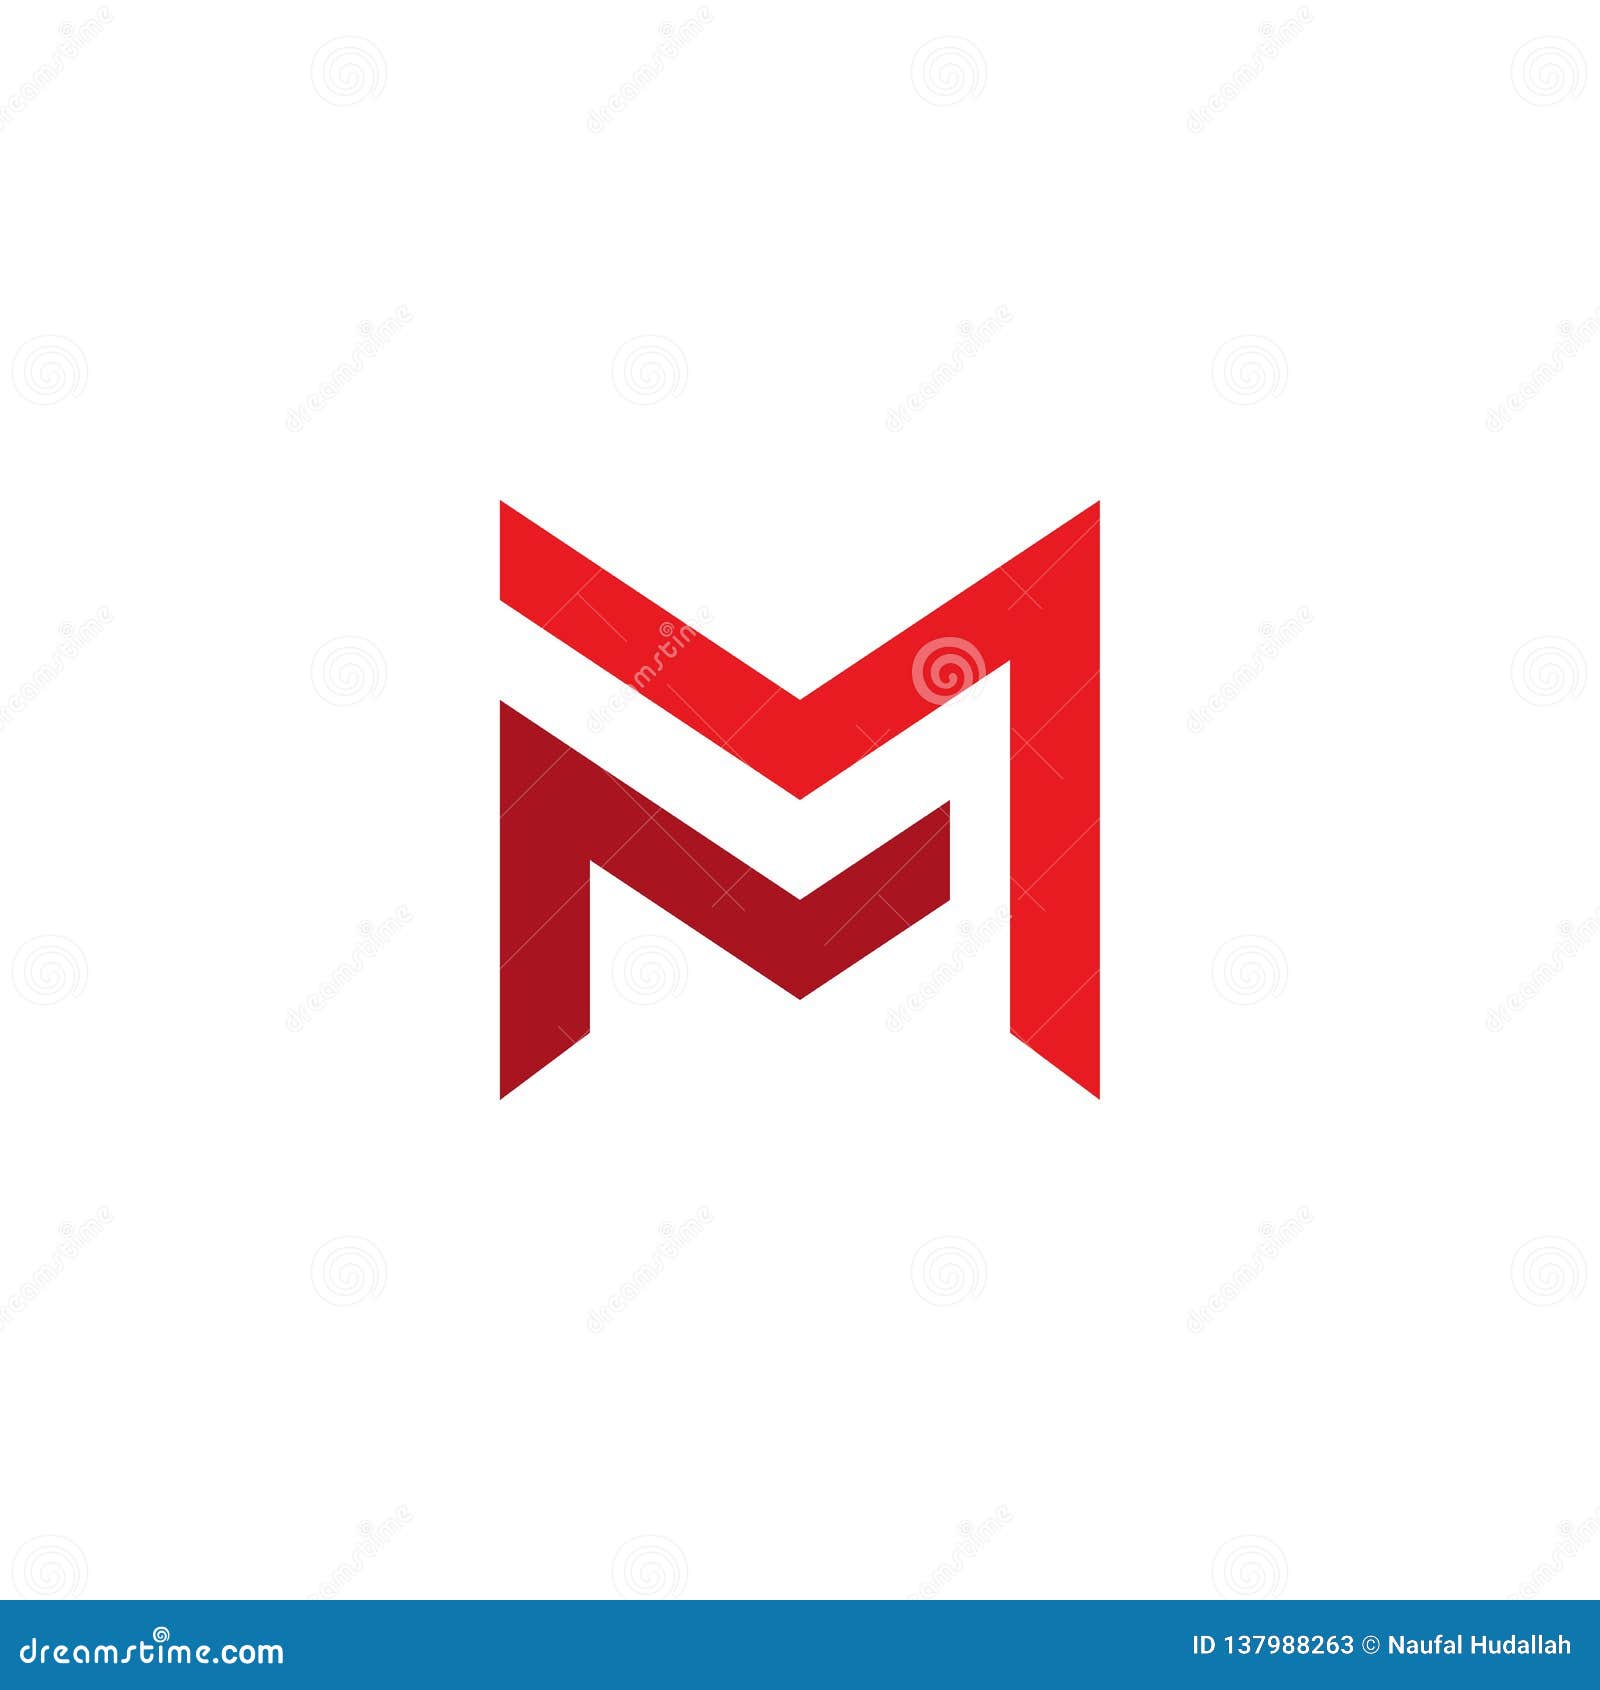 Premium Vector  Mordan mm logo design template royaltyfree vector  illustration